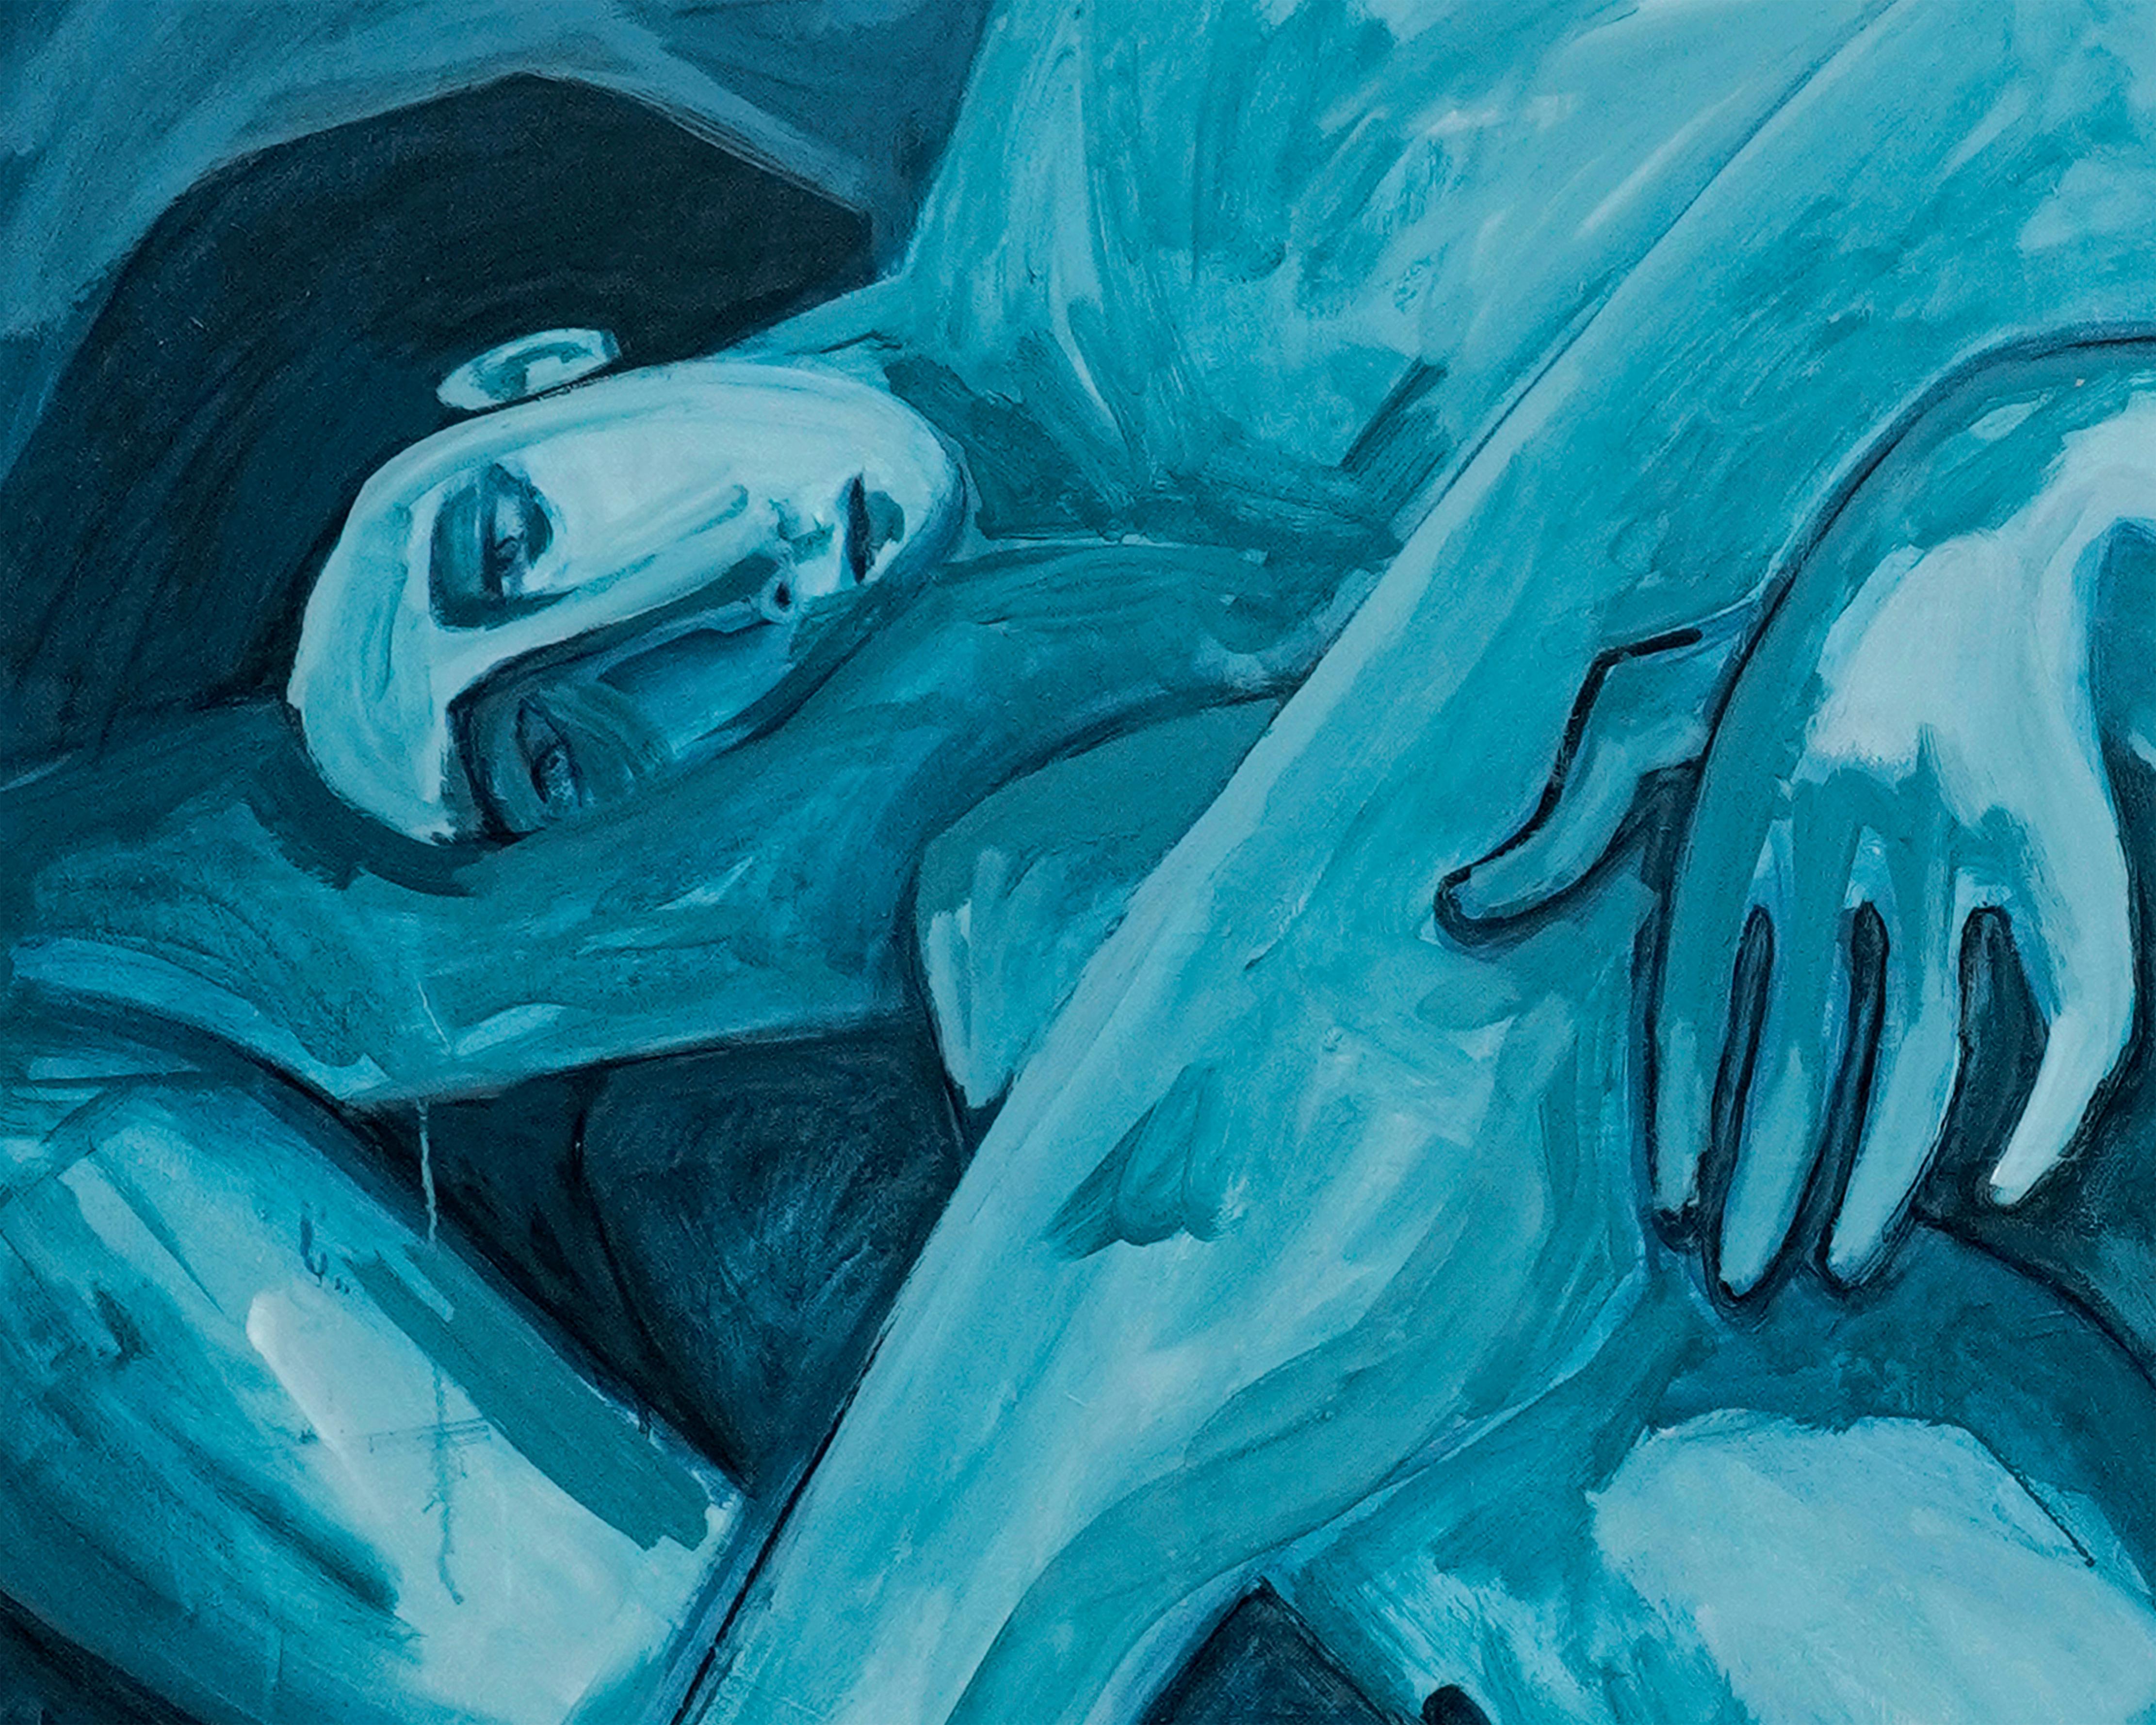 Cuidado! Las ideas son ladronas de sueños, abstract blue dream-like painting - Abstract Painting by Magdalena Paz